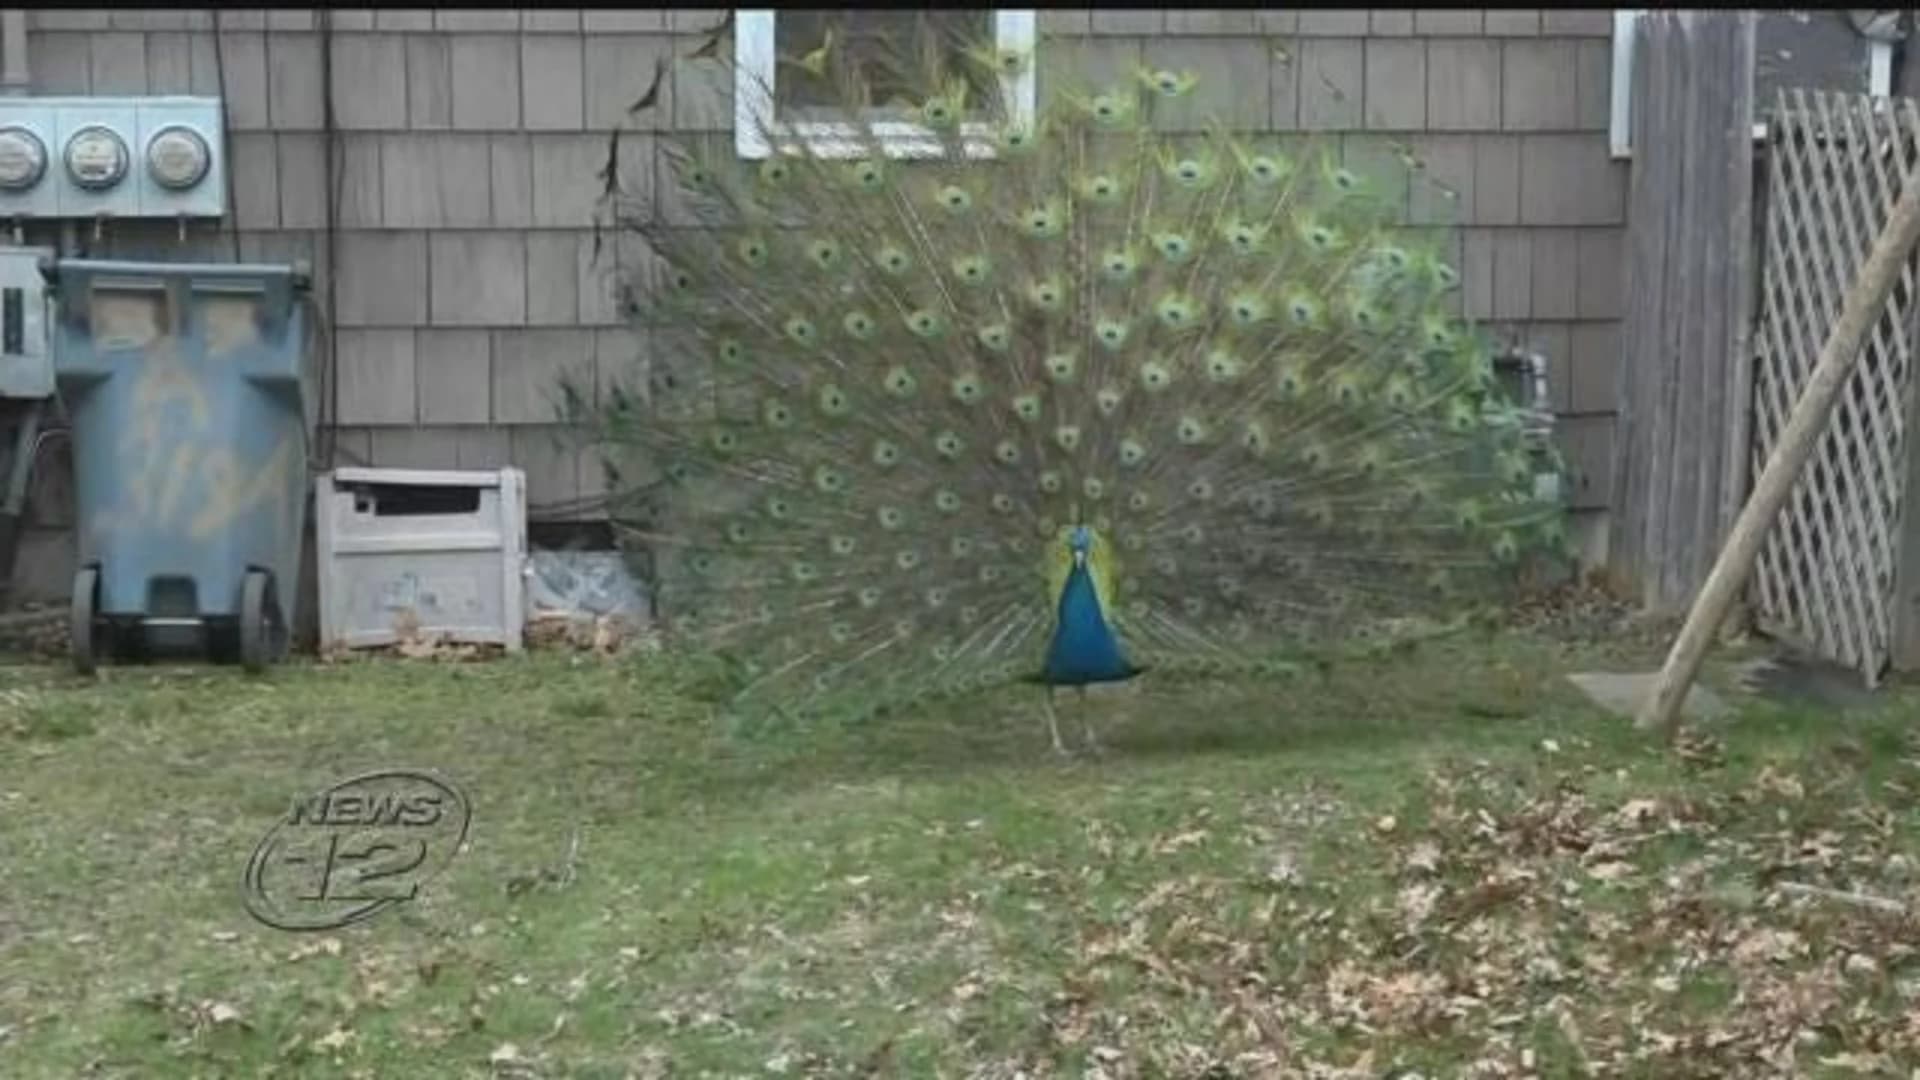 Wandering peacock turns heads in Suffolk neighborhood